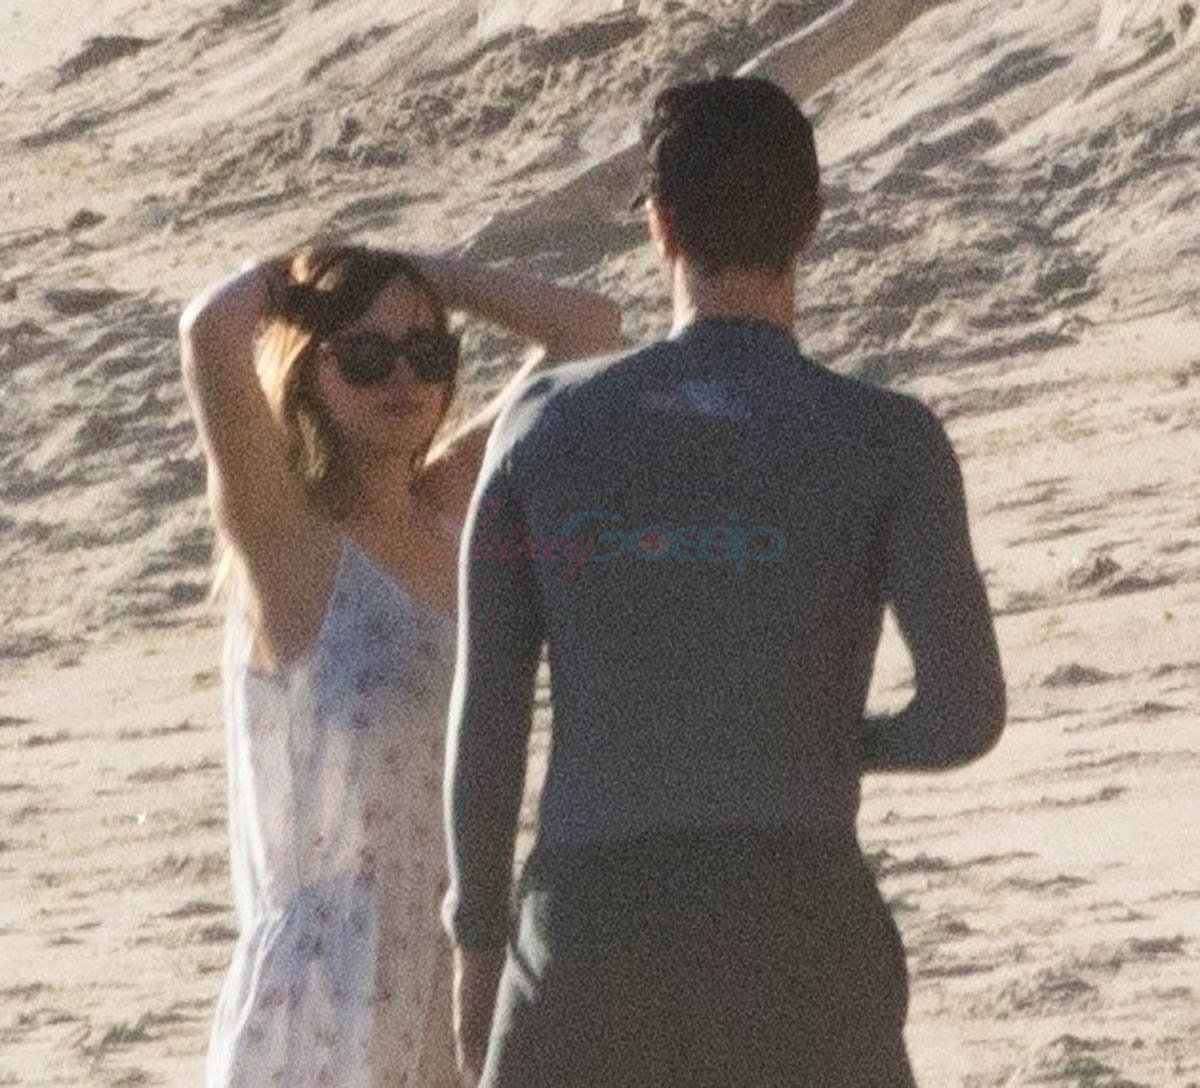 Dakota Johnson and Chris Martin on the beach together in Malibu1200 x 1088